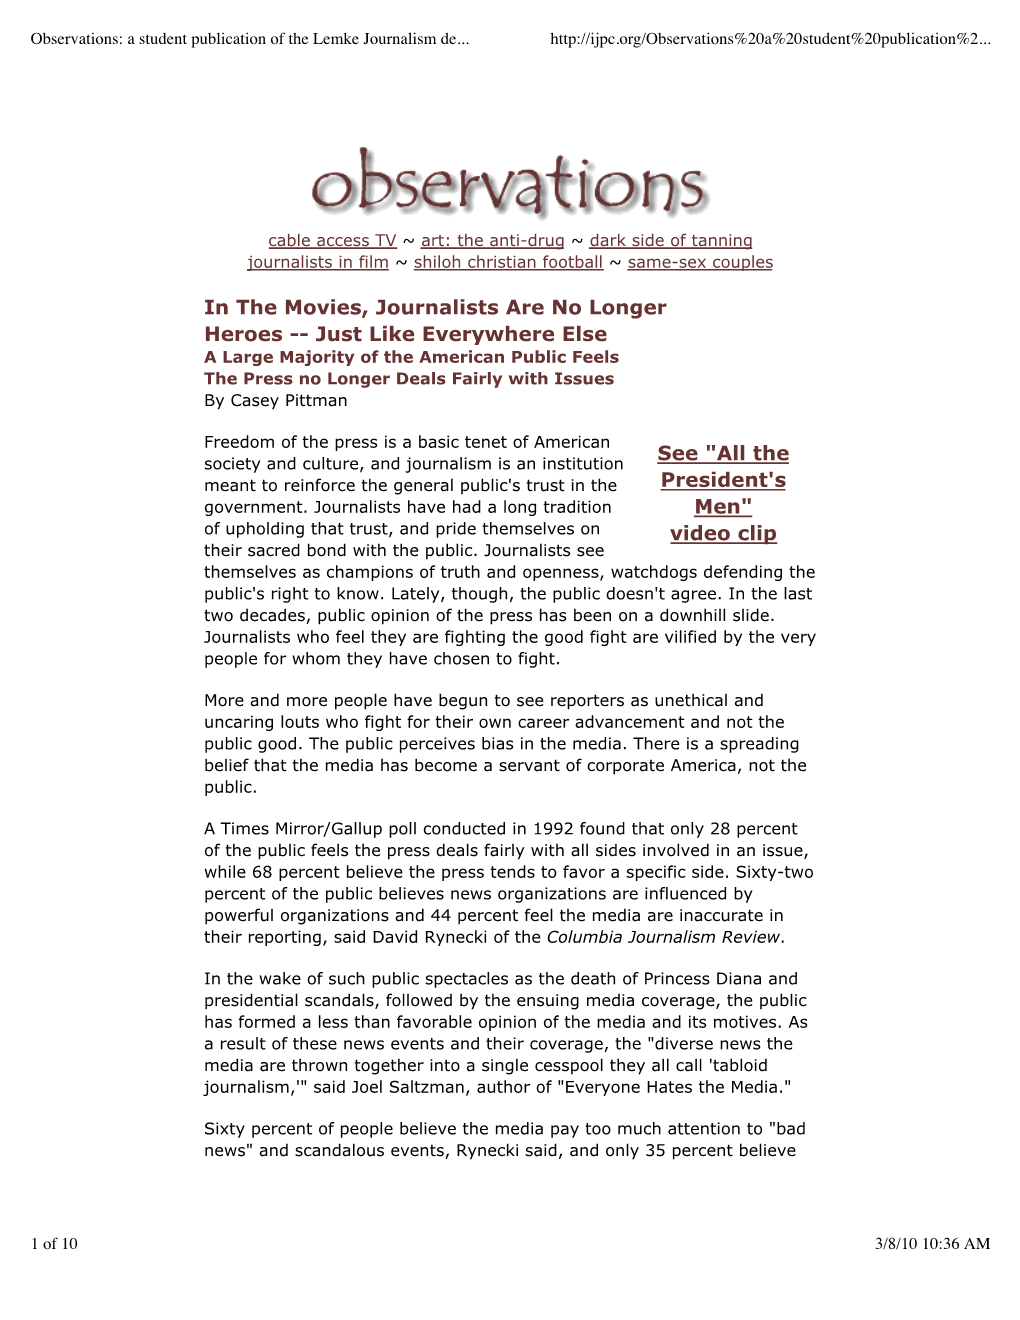 Observations: a Student Publication of the Lemke Journalism De